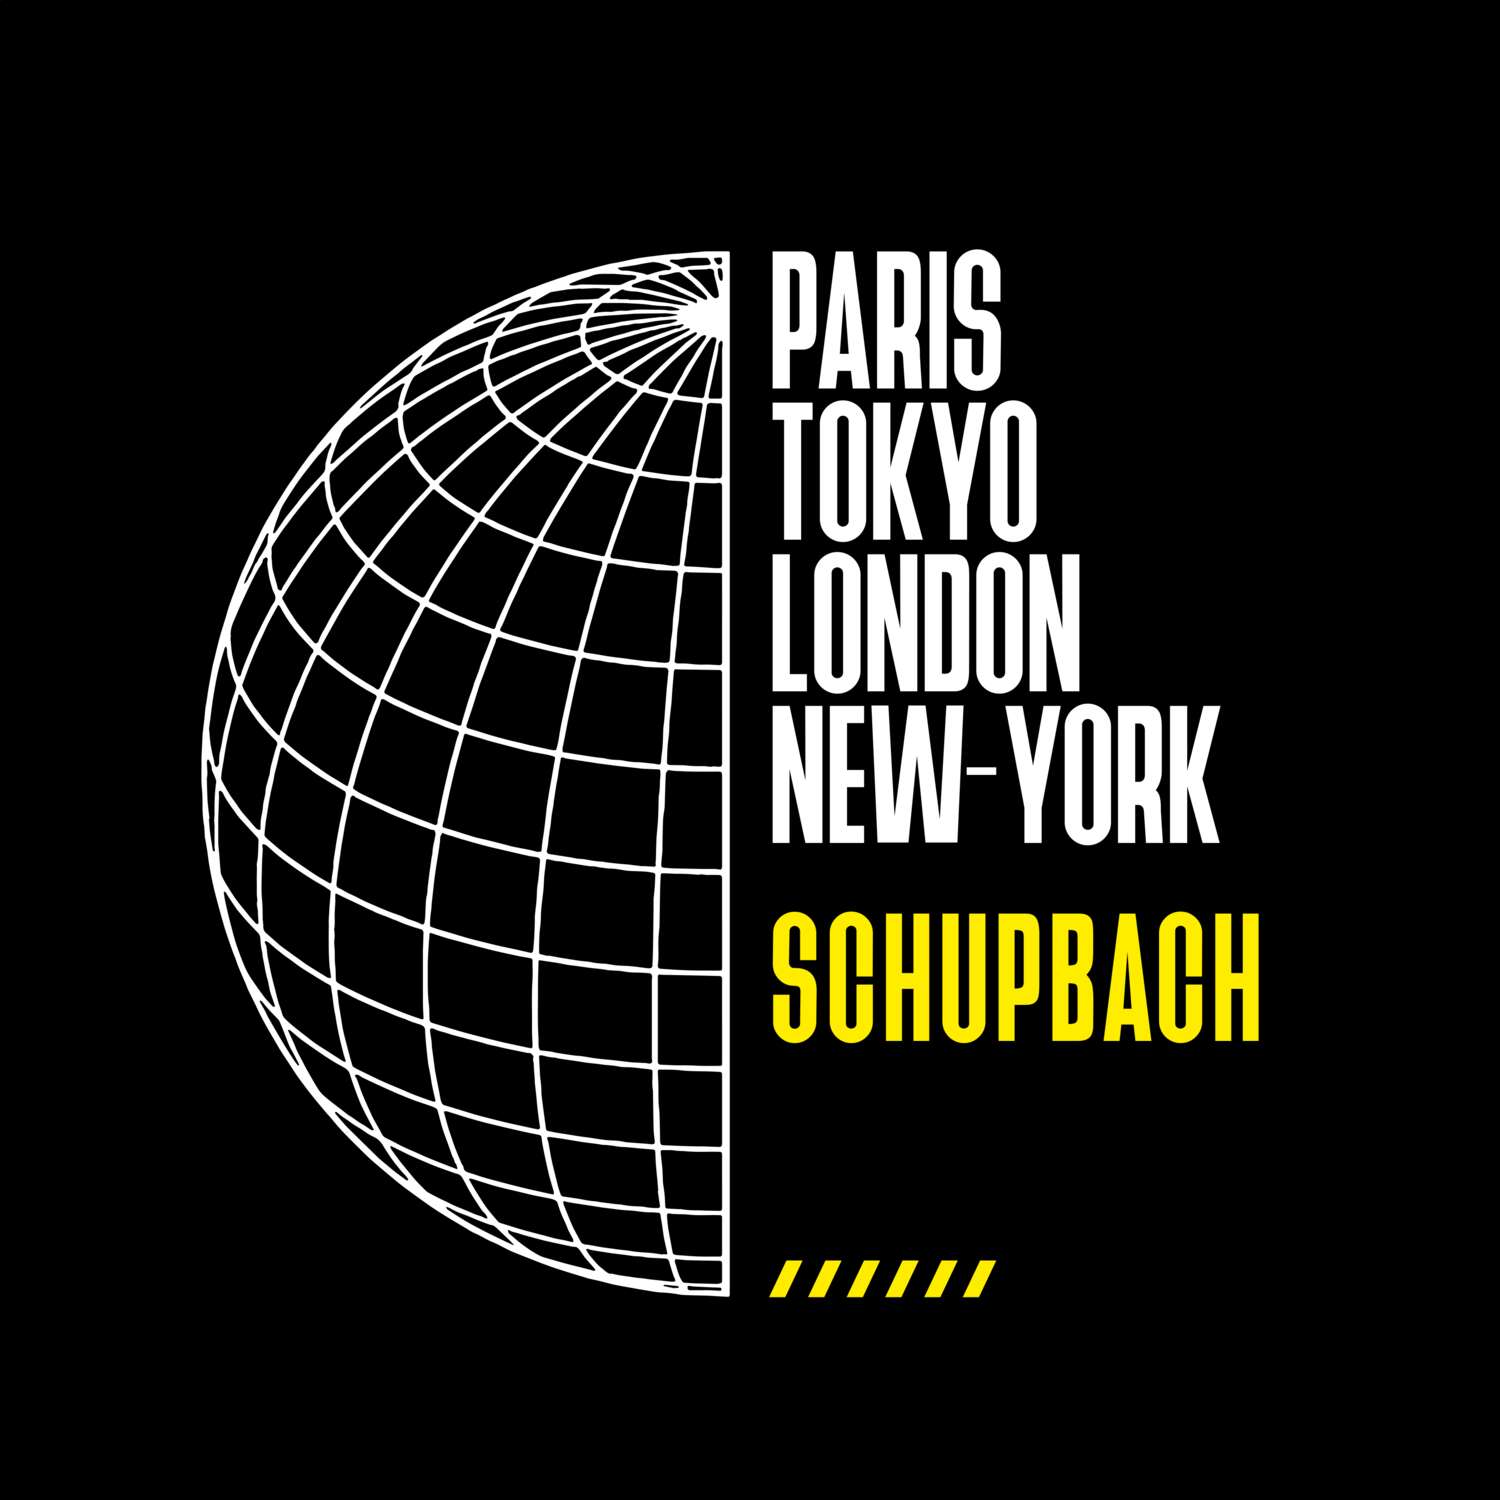 Schupbach T-Shirt »Paris Tokyo London«